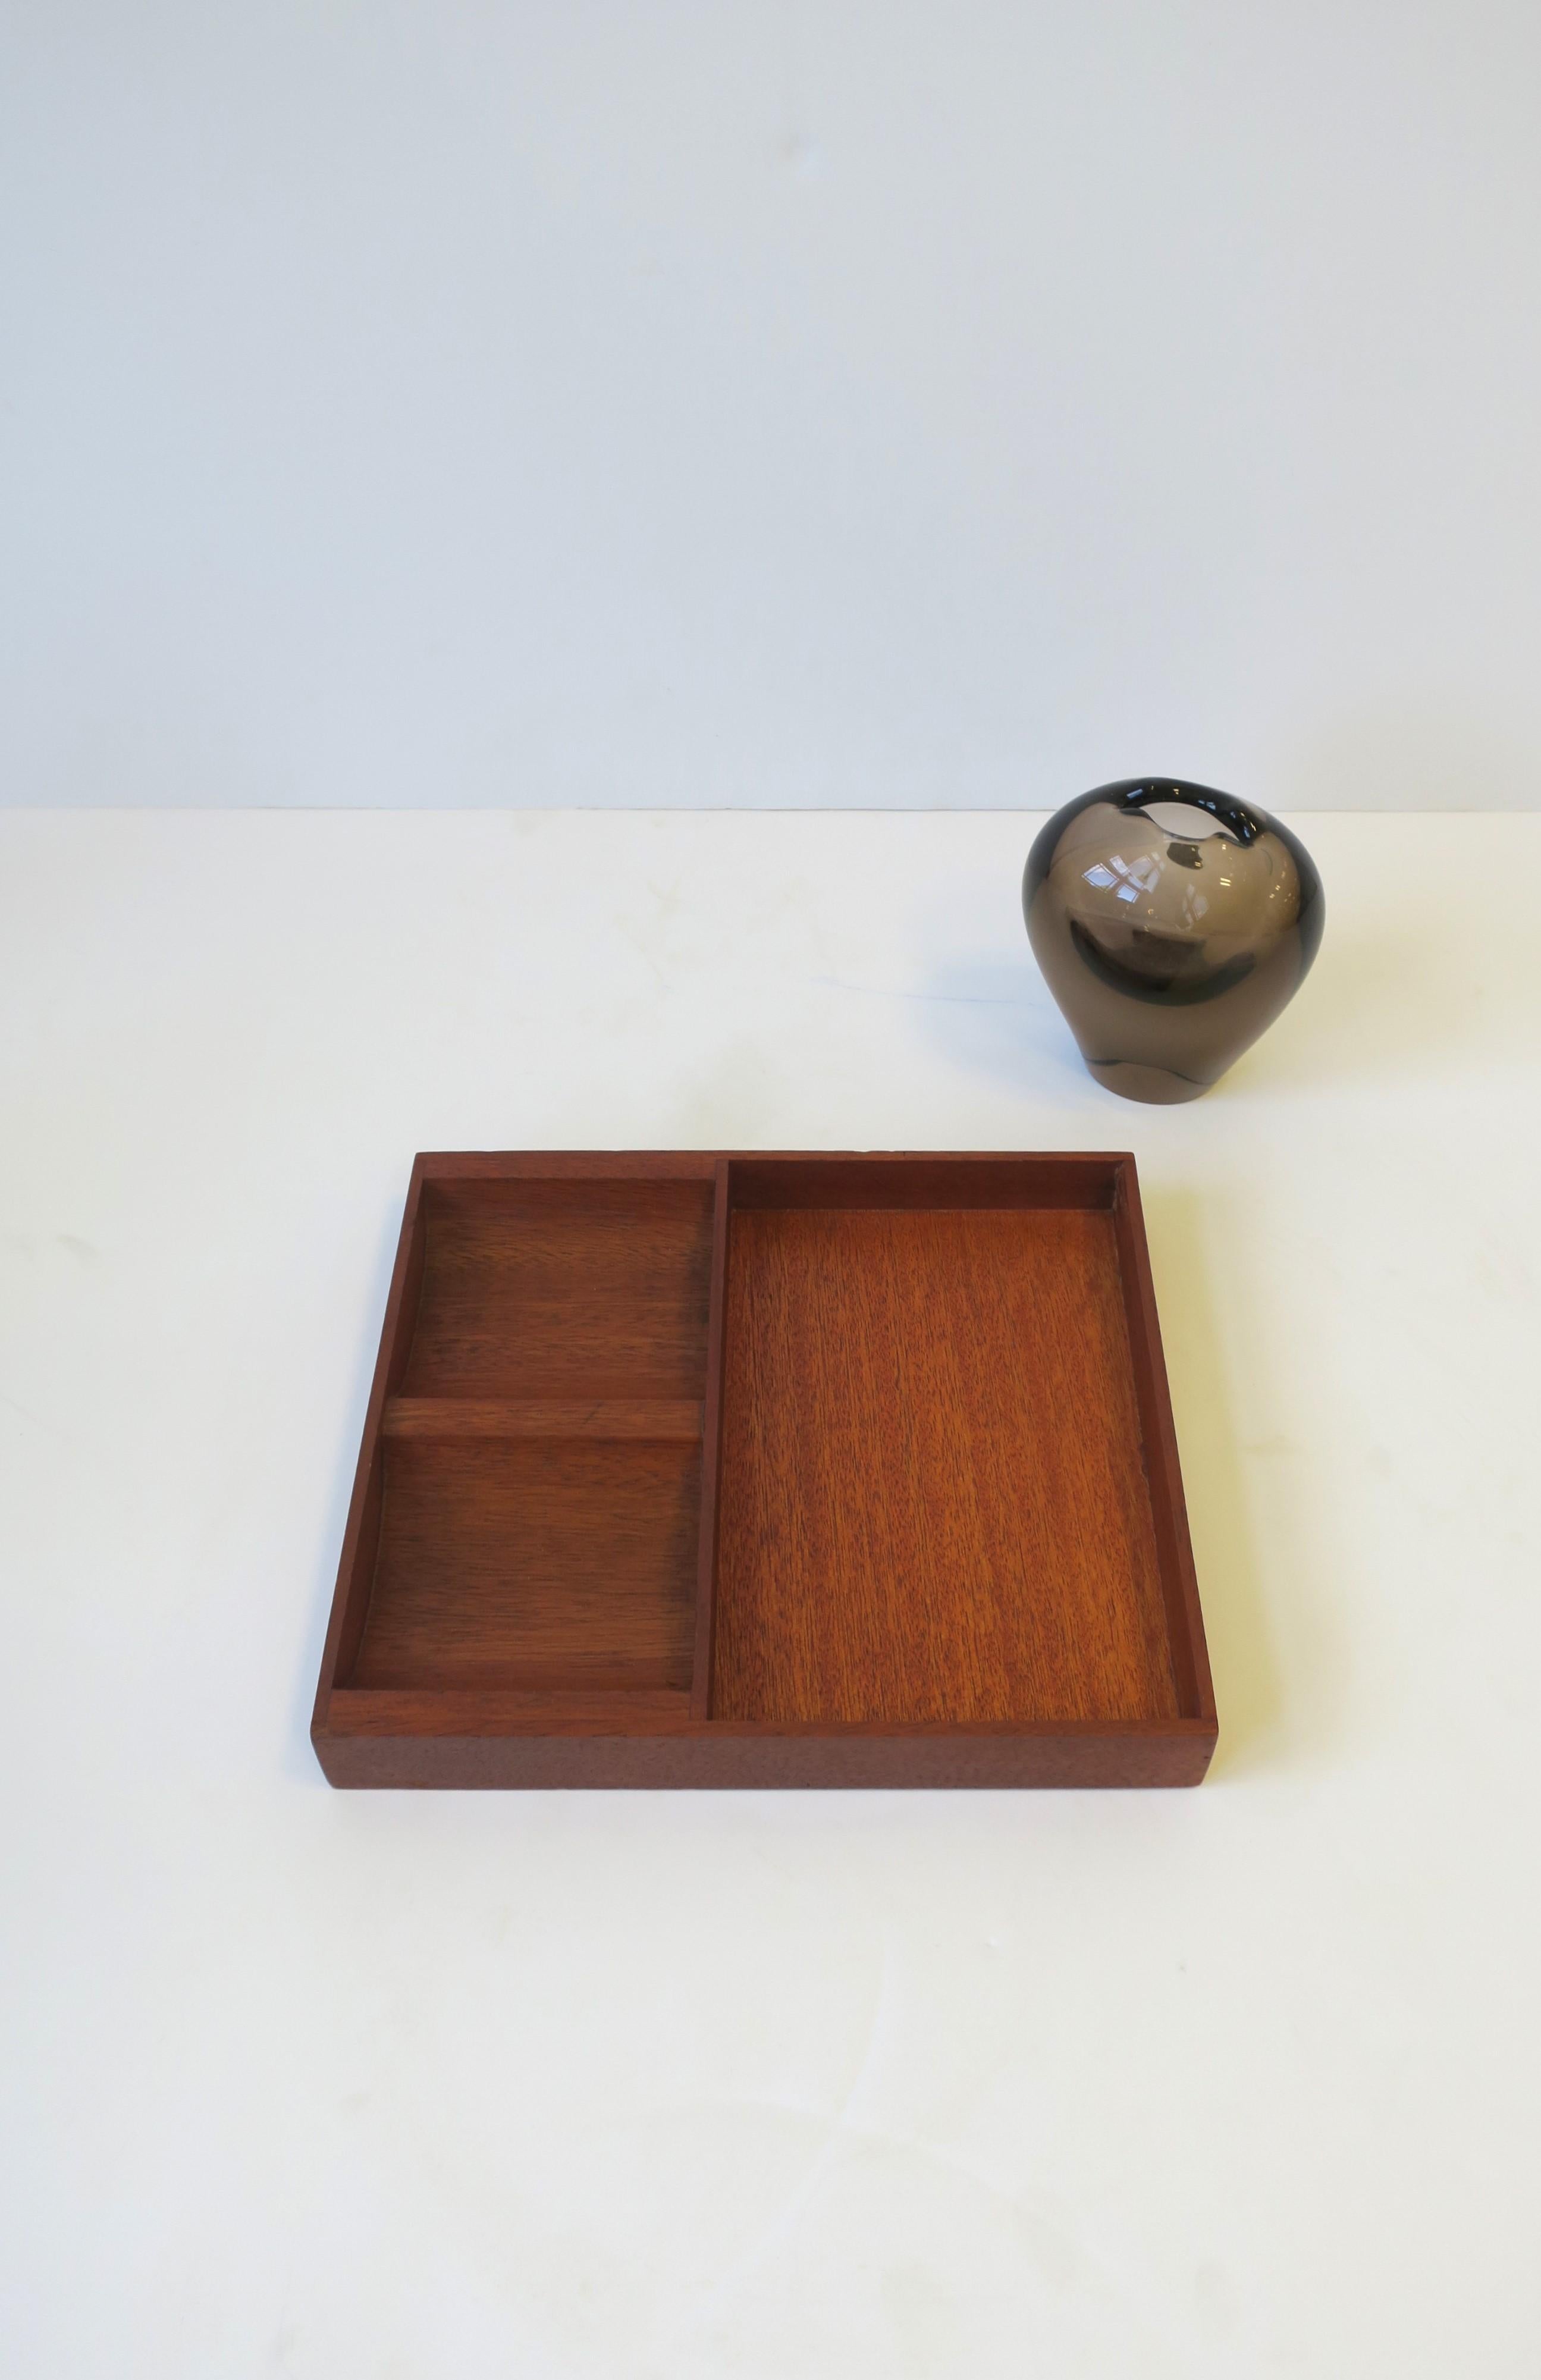 20th Century Midcentury Modern Minimalist Desk or Vanity Tray Organizer Vide-Poche For Sale